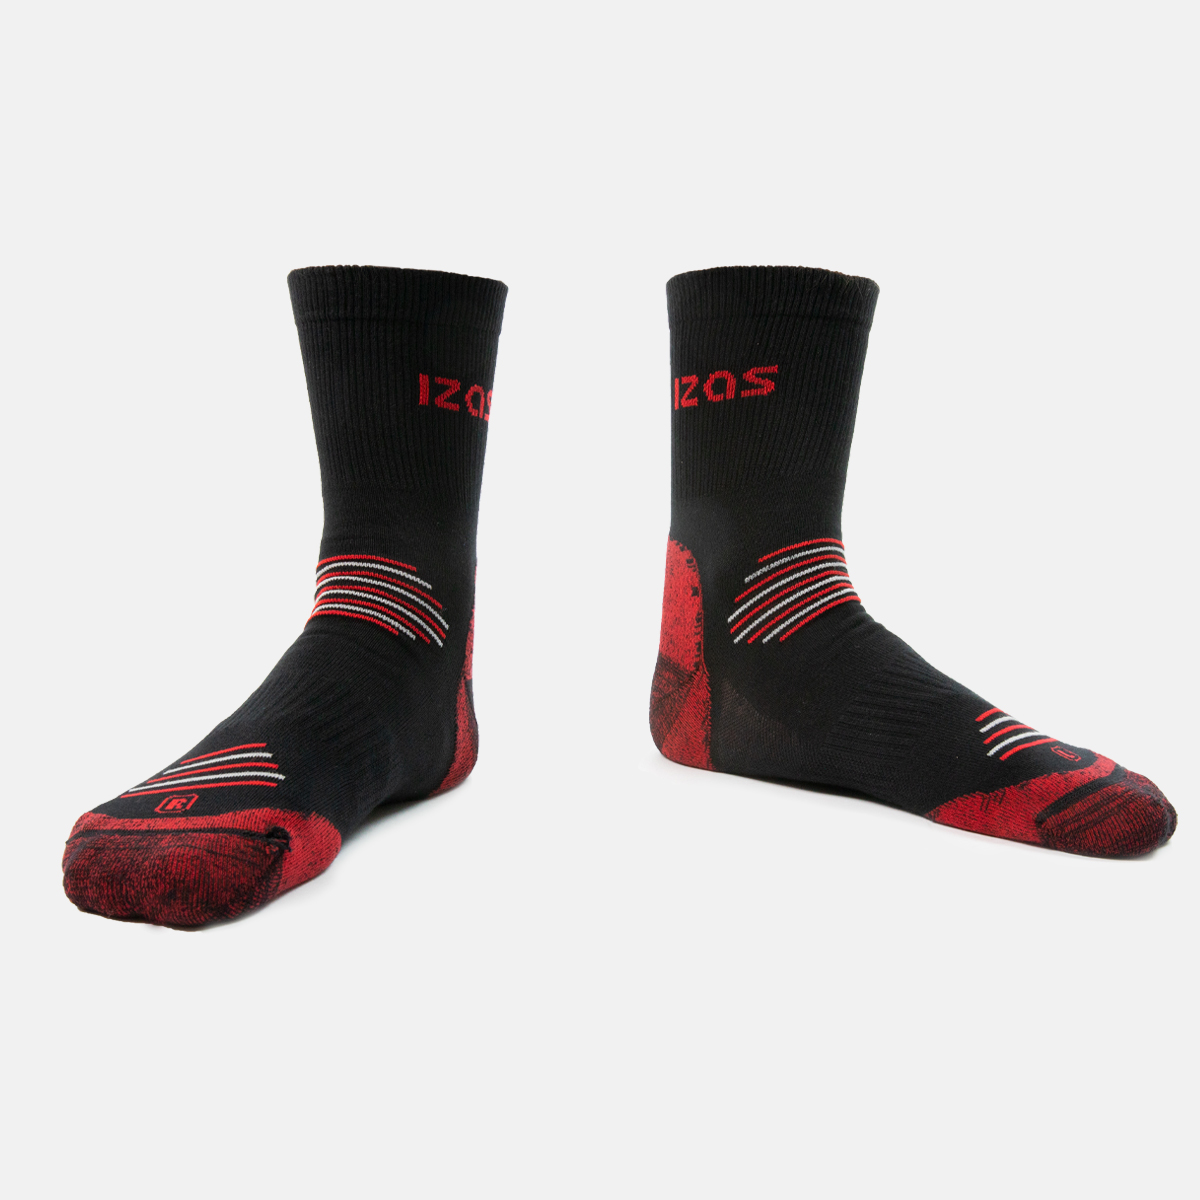 Hiking Socks Black/Red, Calcetines de senderismo